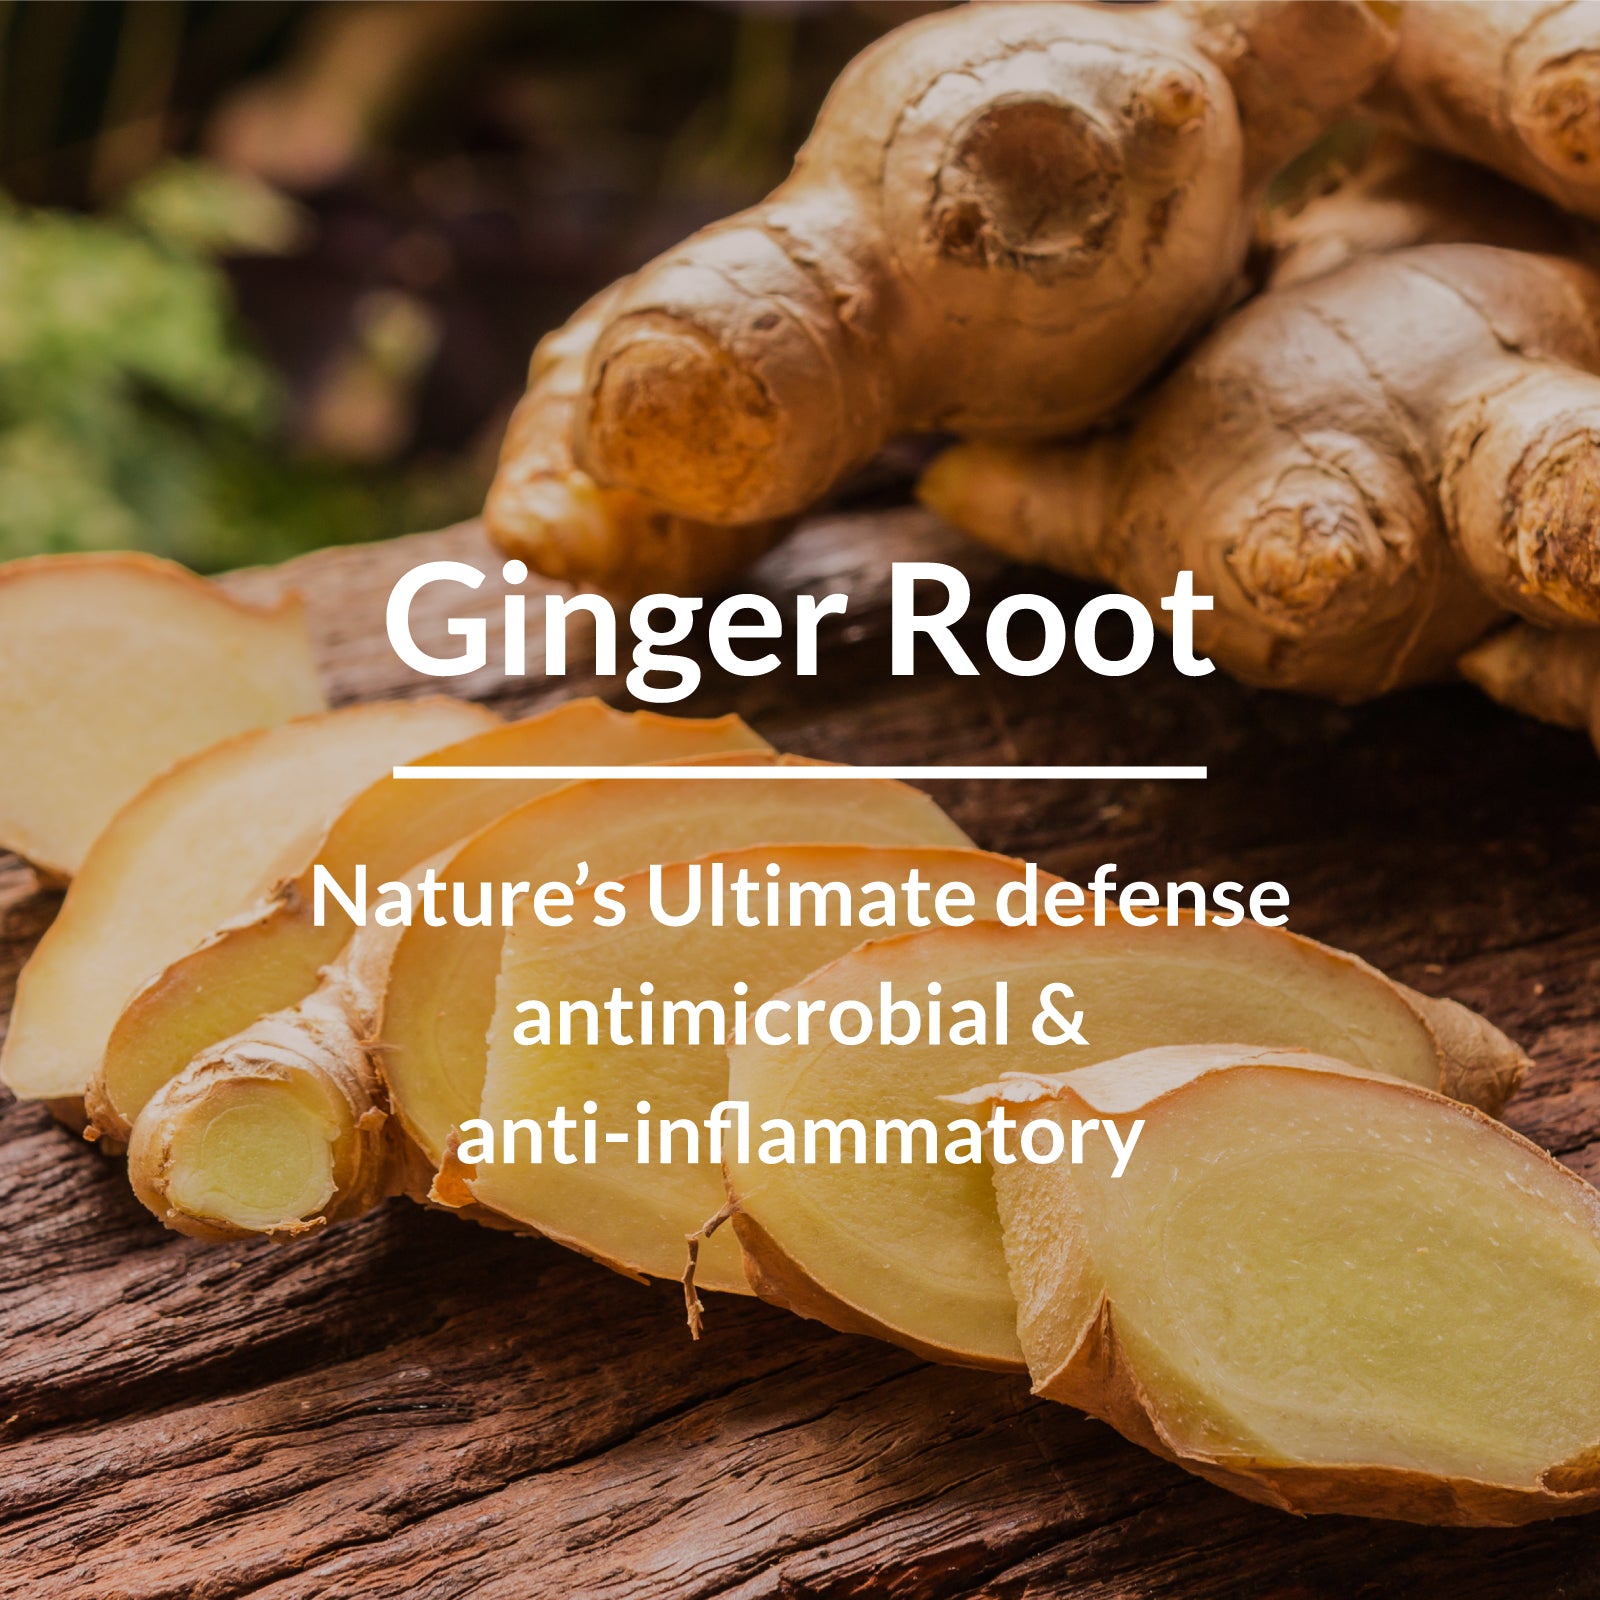 Ginger Root Dandruff-Control* Shampoo